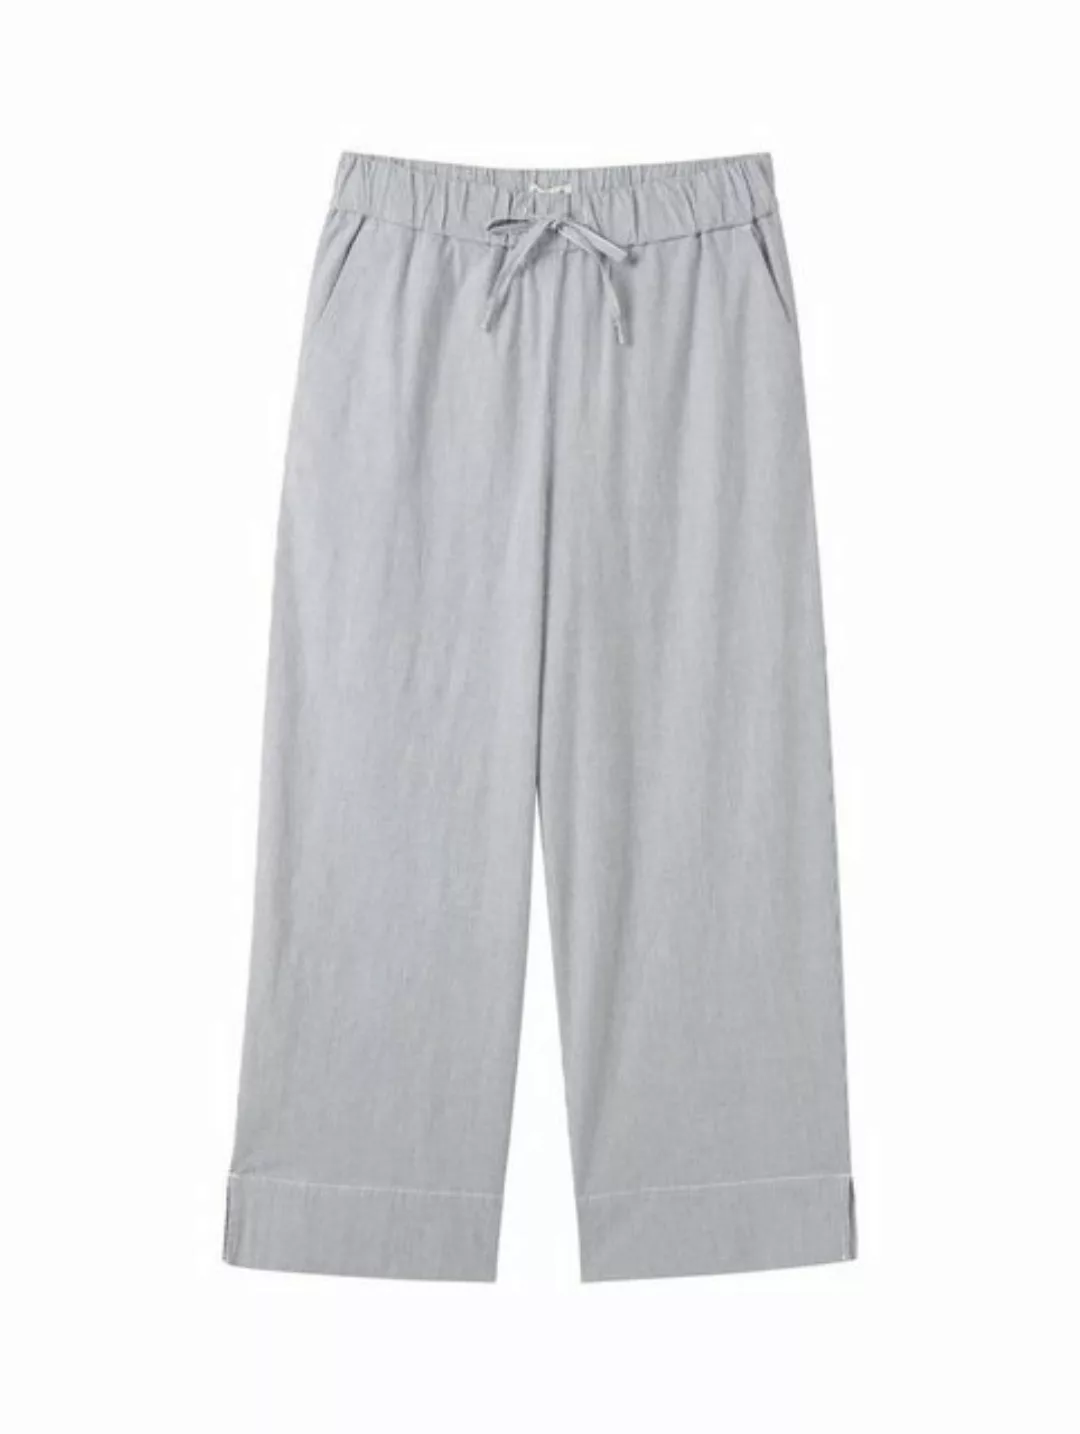 TOM TAILOR Stoffhose loose fit striped pants, delicate navy white stripe günstig online kaufen